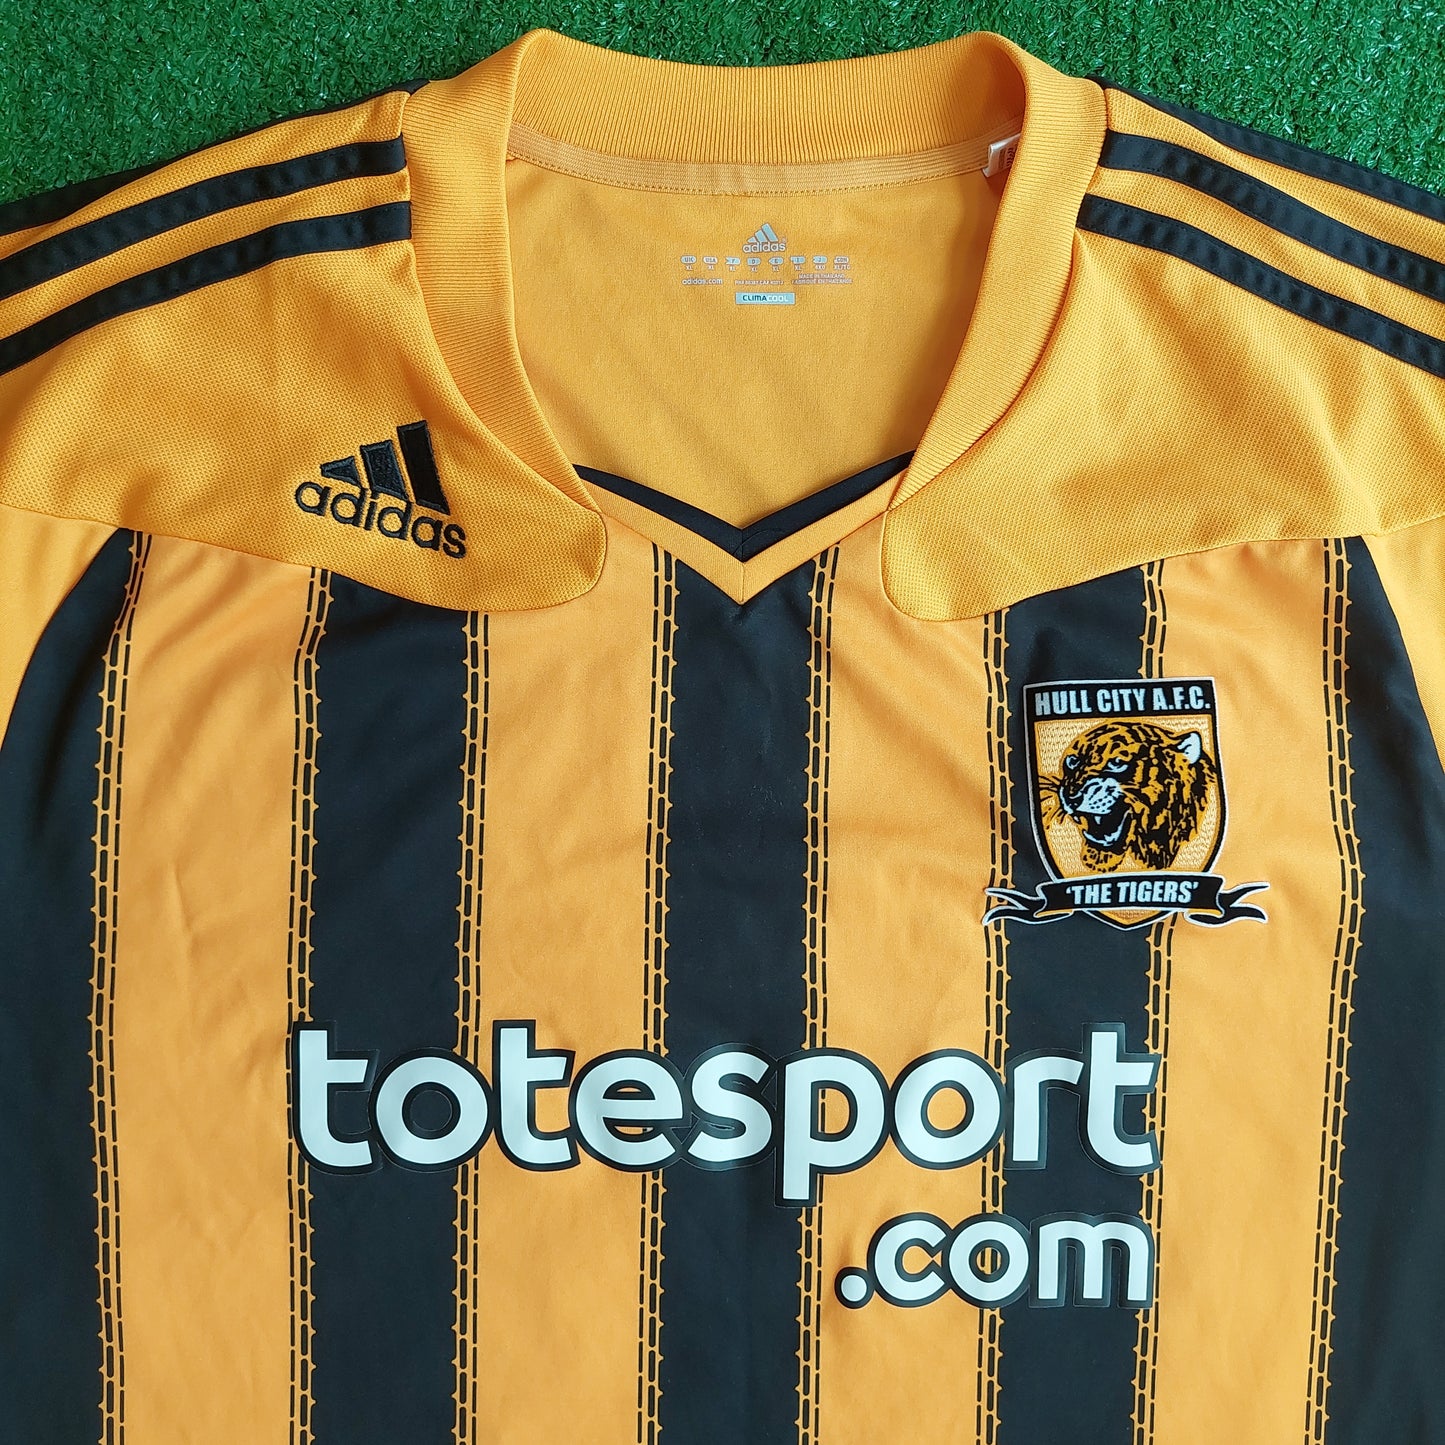 Hull City 2010/11 Home Shirt (Very Good) - Size XL